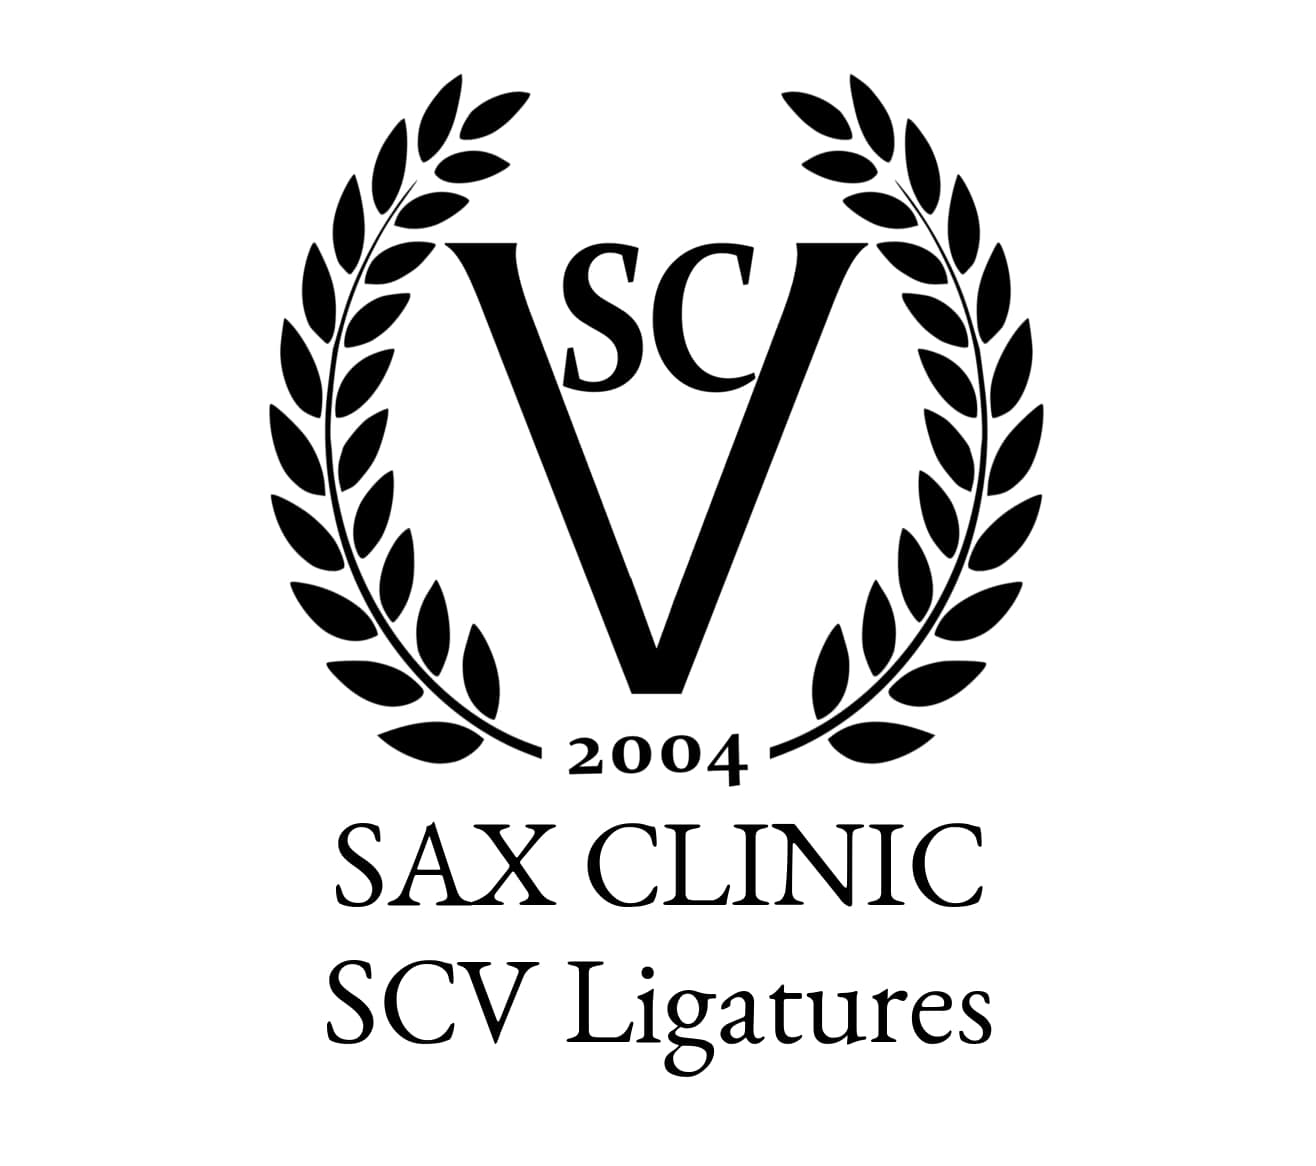 SAX CLINIC - SVC LIGATURE 